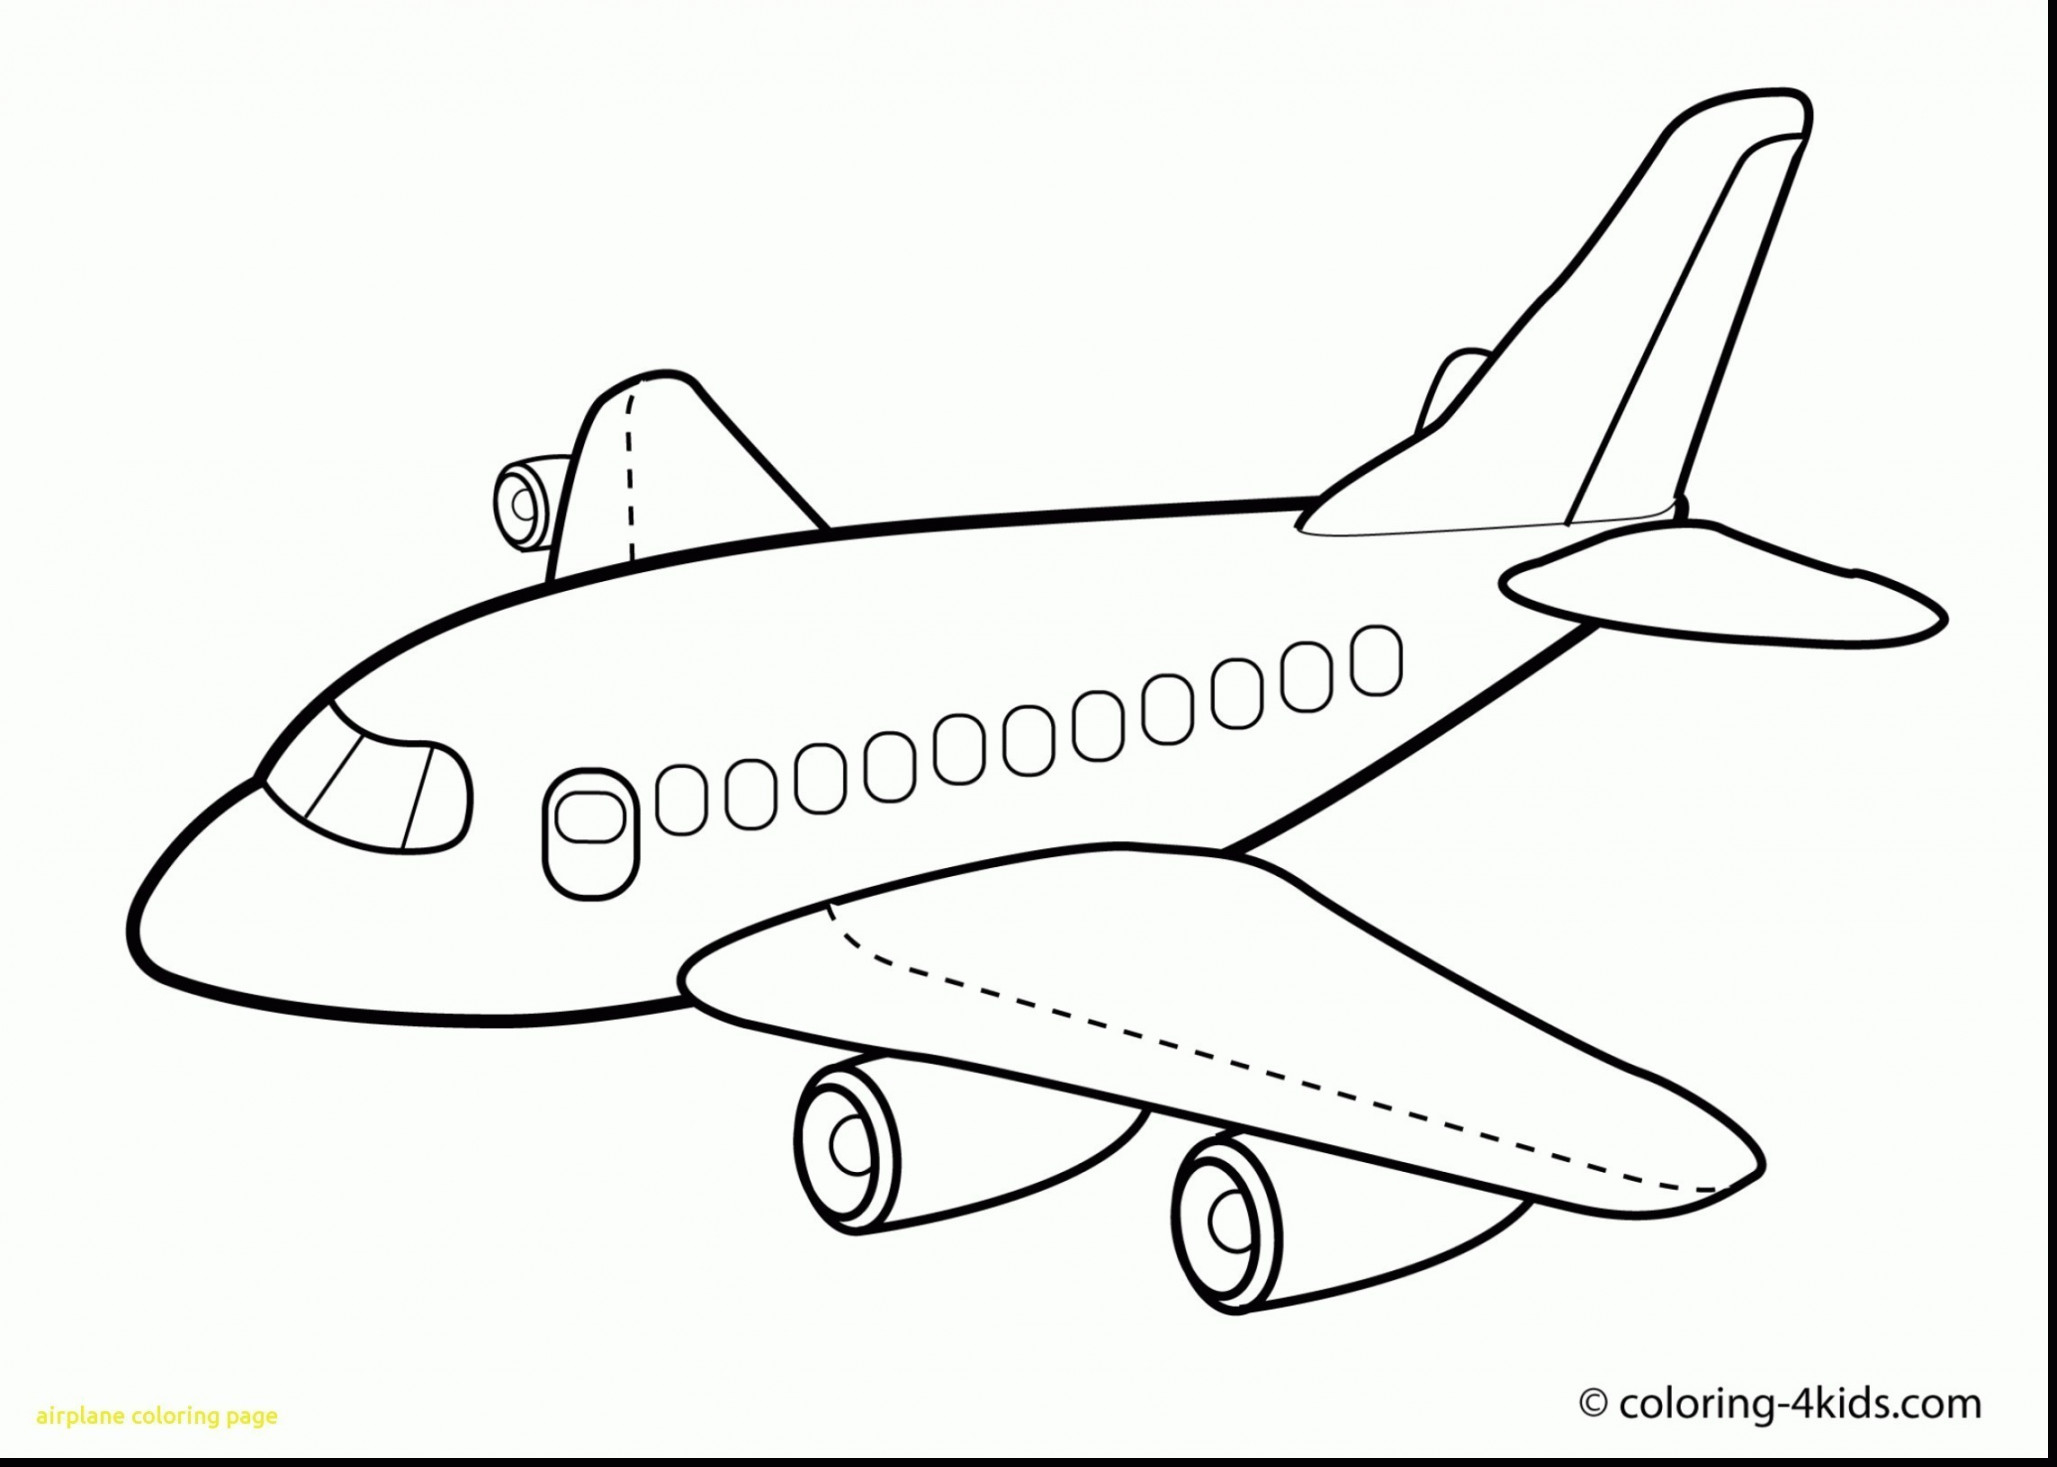 paper jet plane instructions